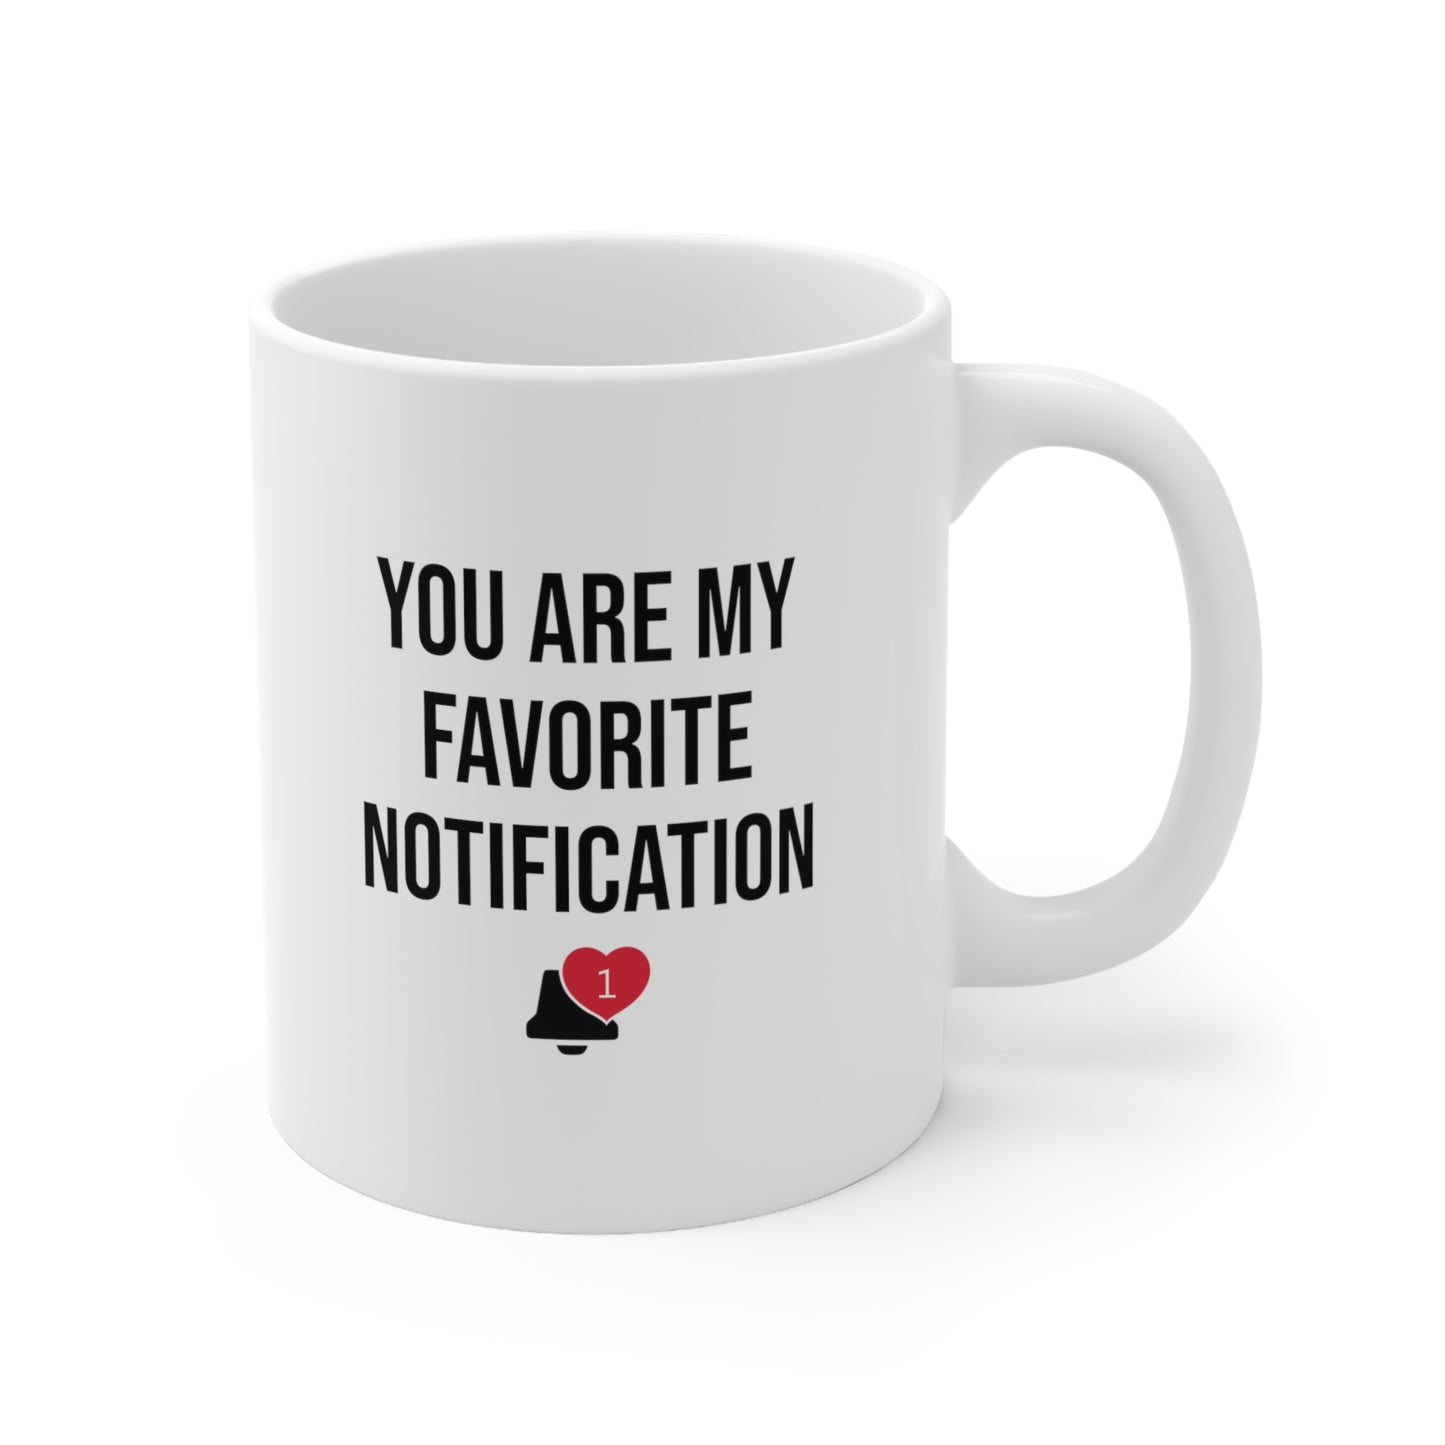 You are my favorite notification Coffee Mug 11oz